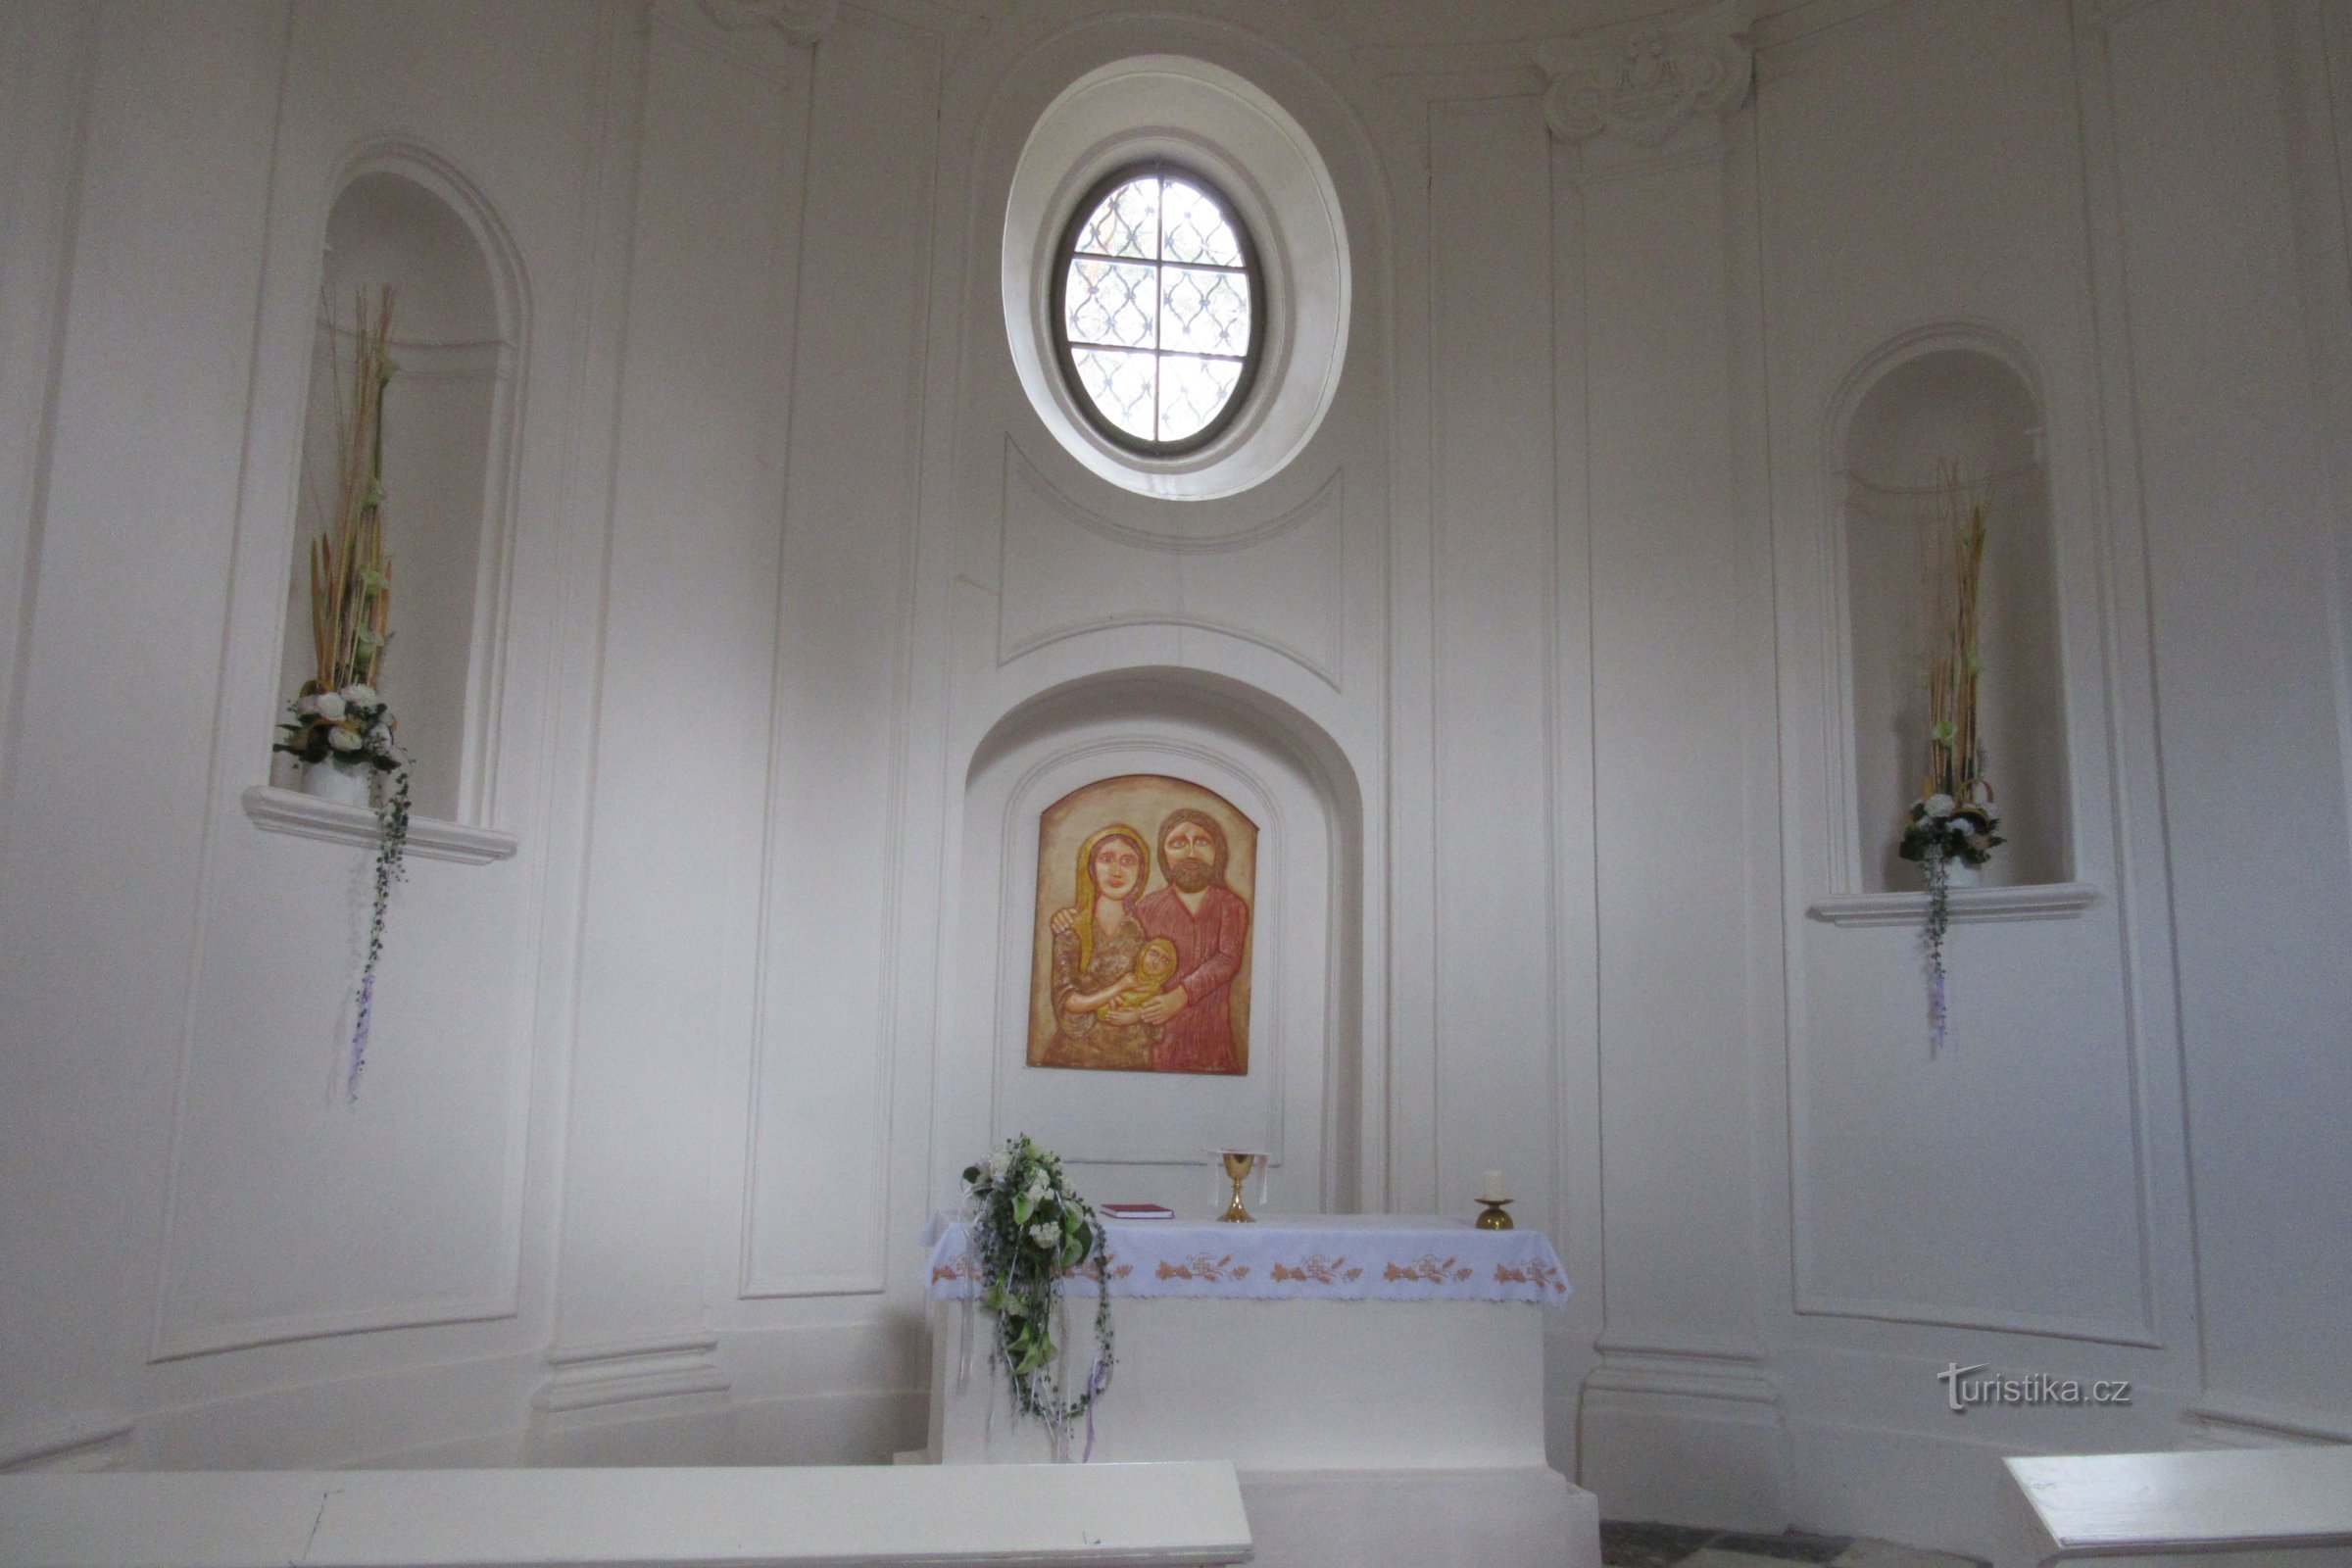 interior de la capilla